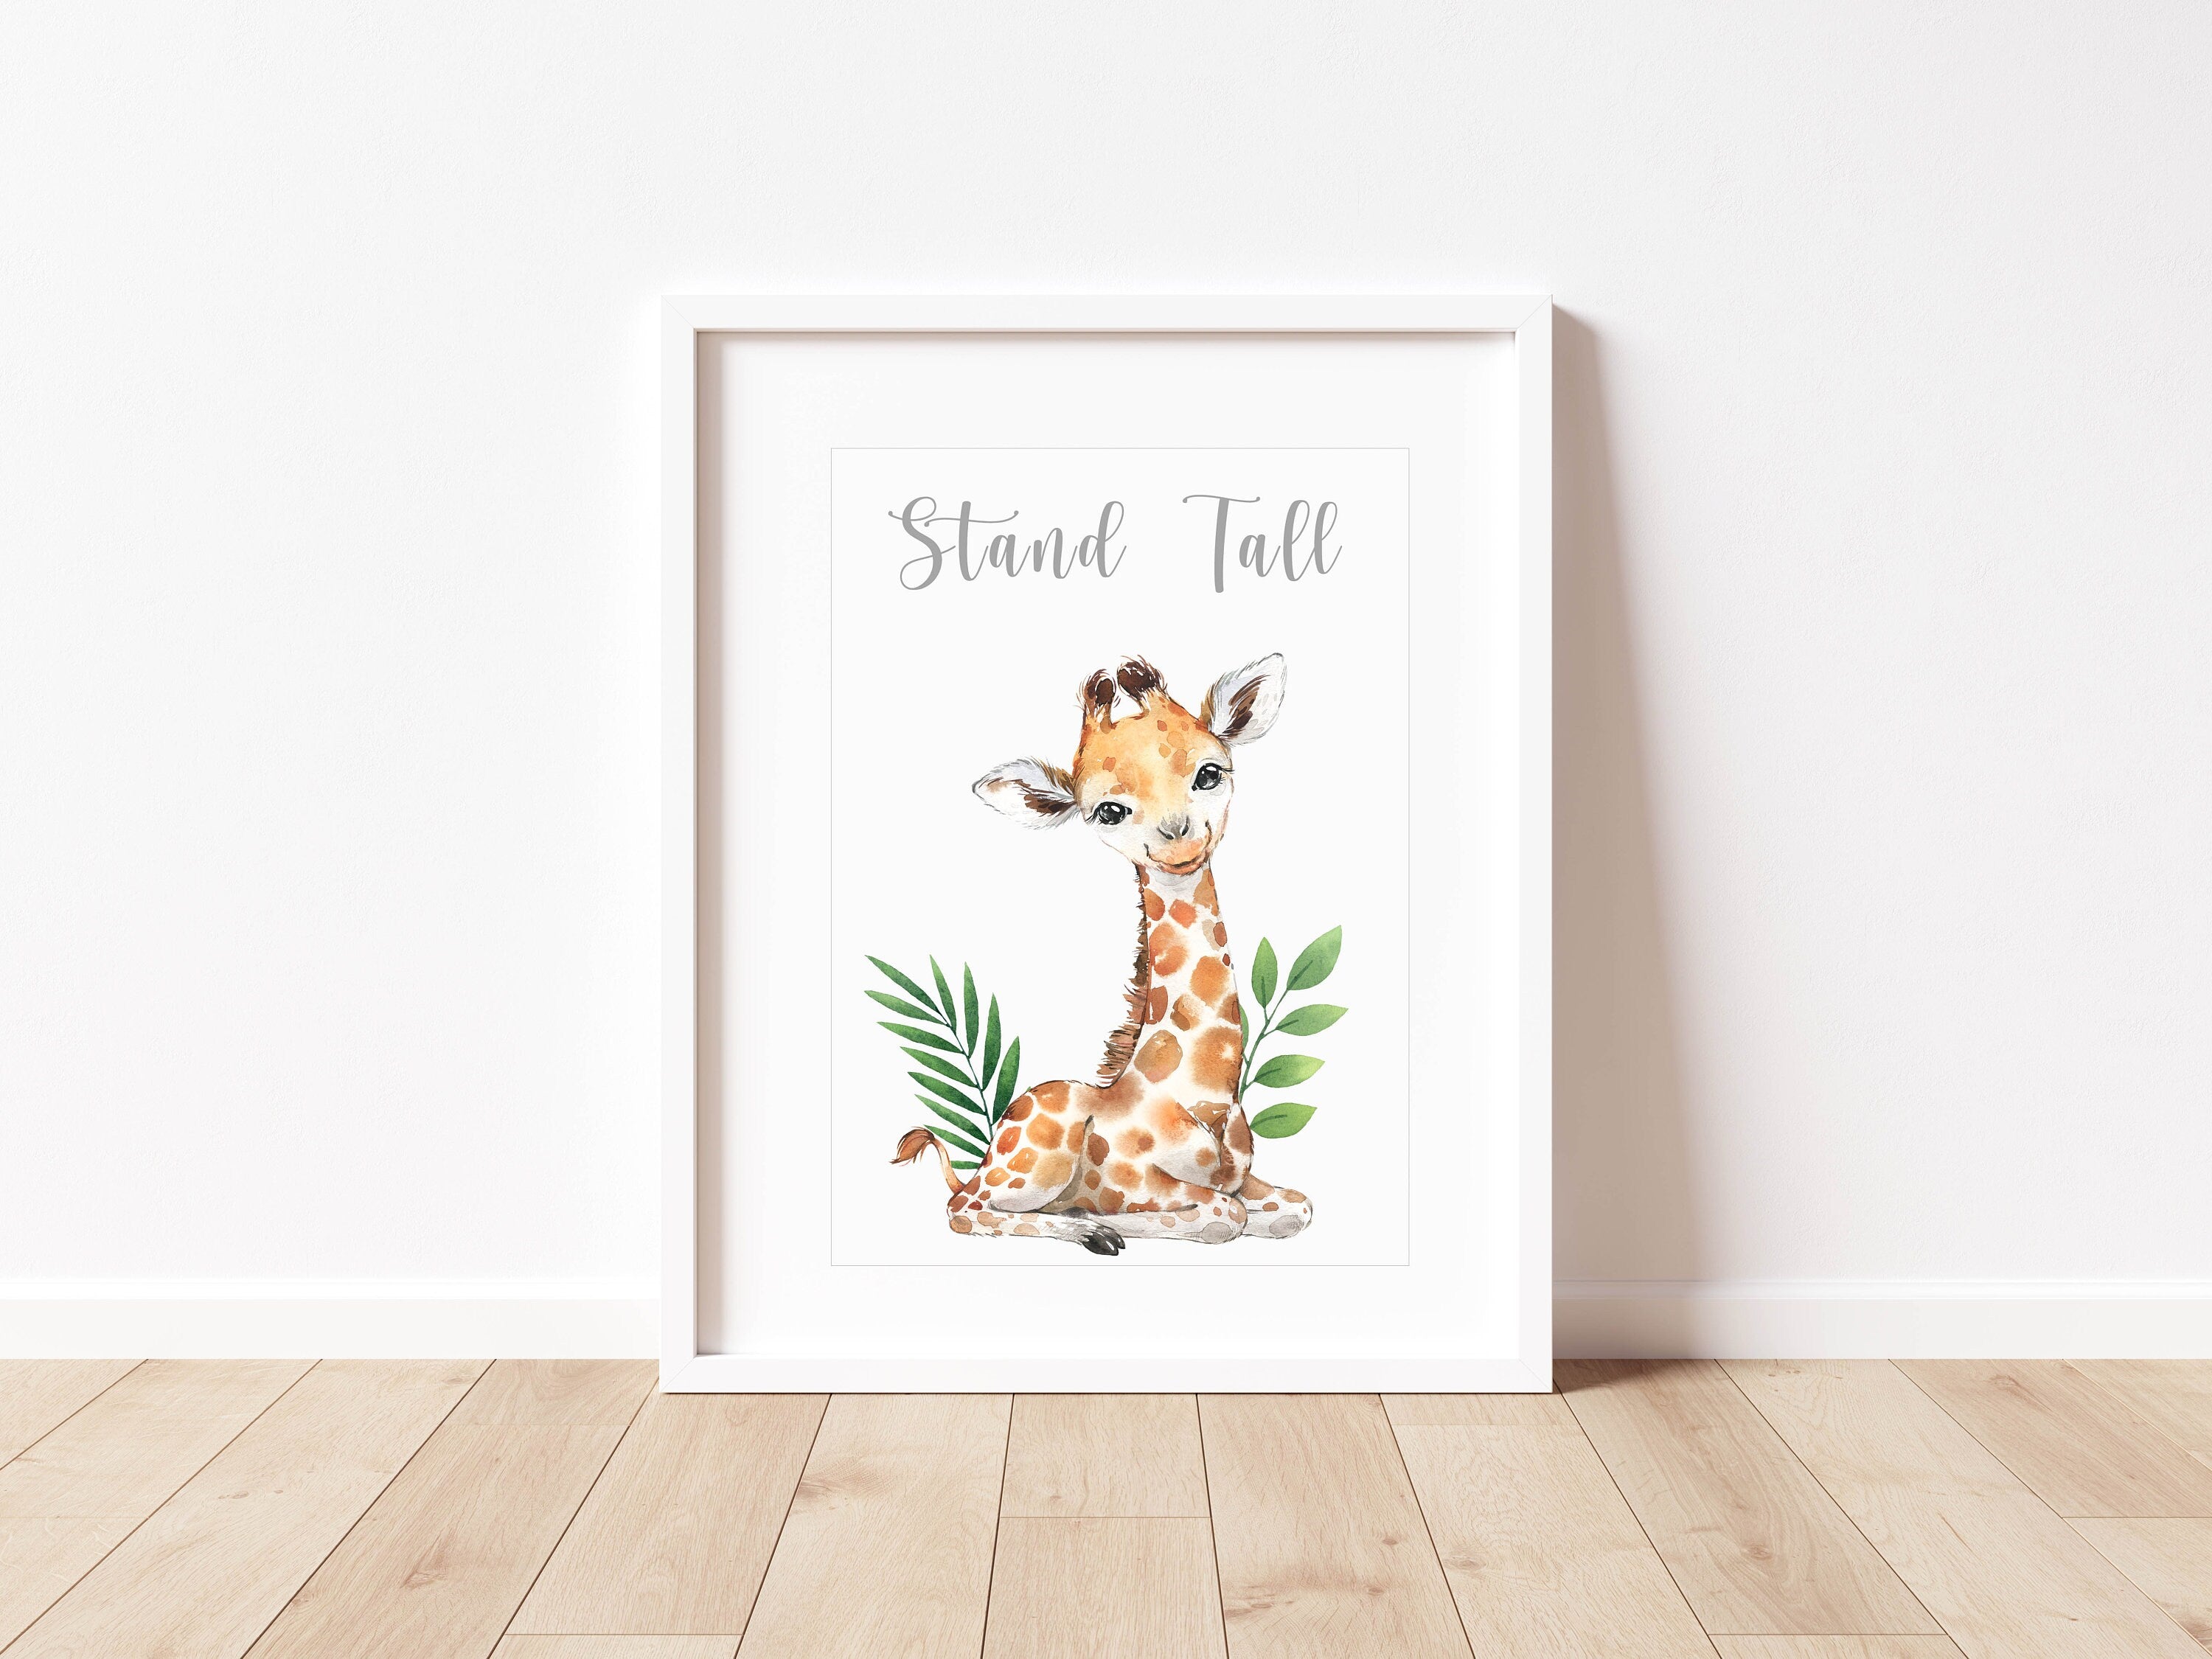 Jungle Animals Nursery Decor - Safari Nursery Prints - Nursery Set - Baby Wall Art - Nursery Decor - Jungle Theme - Elephant Giraffe Zebra